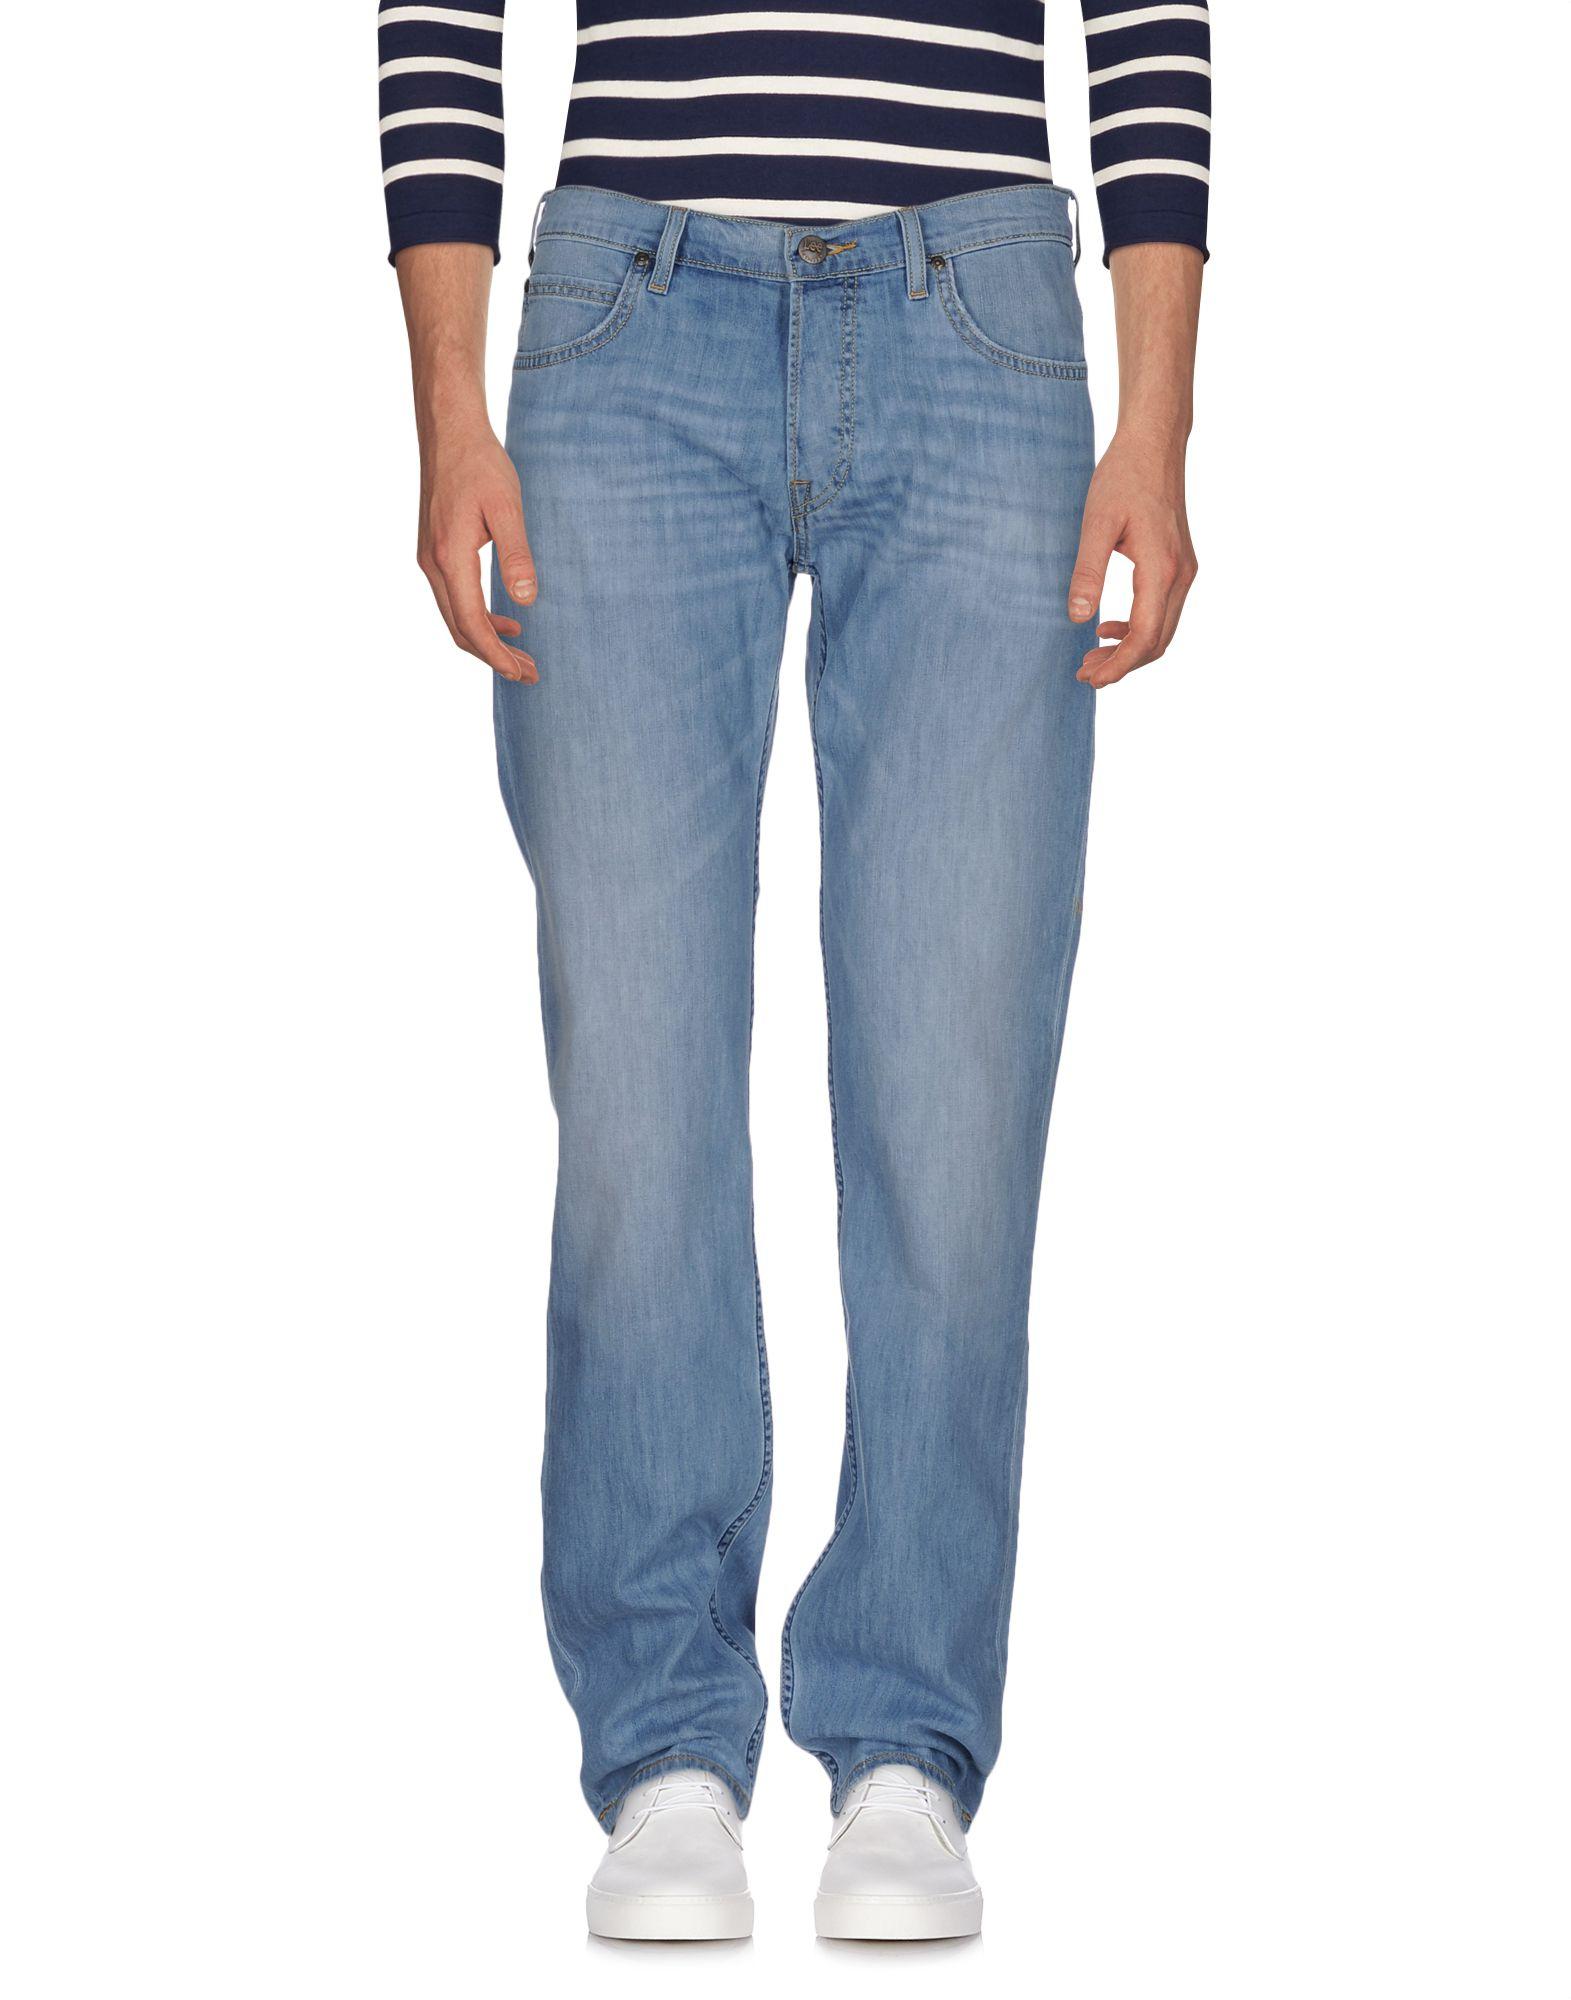 Lyst - Lee Jeans Denim Pants in Blue for Men